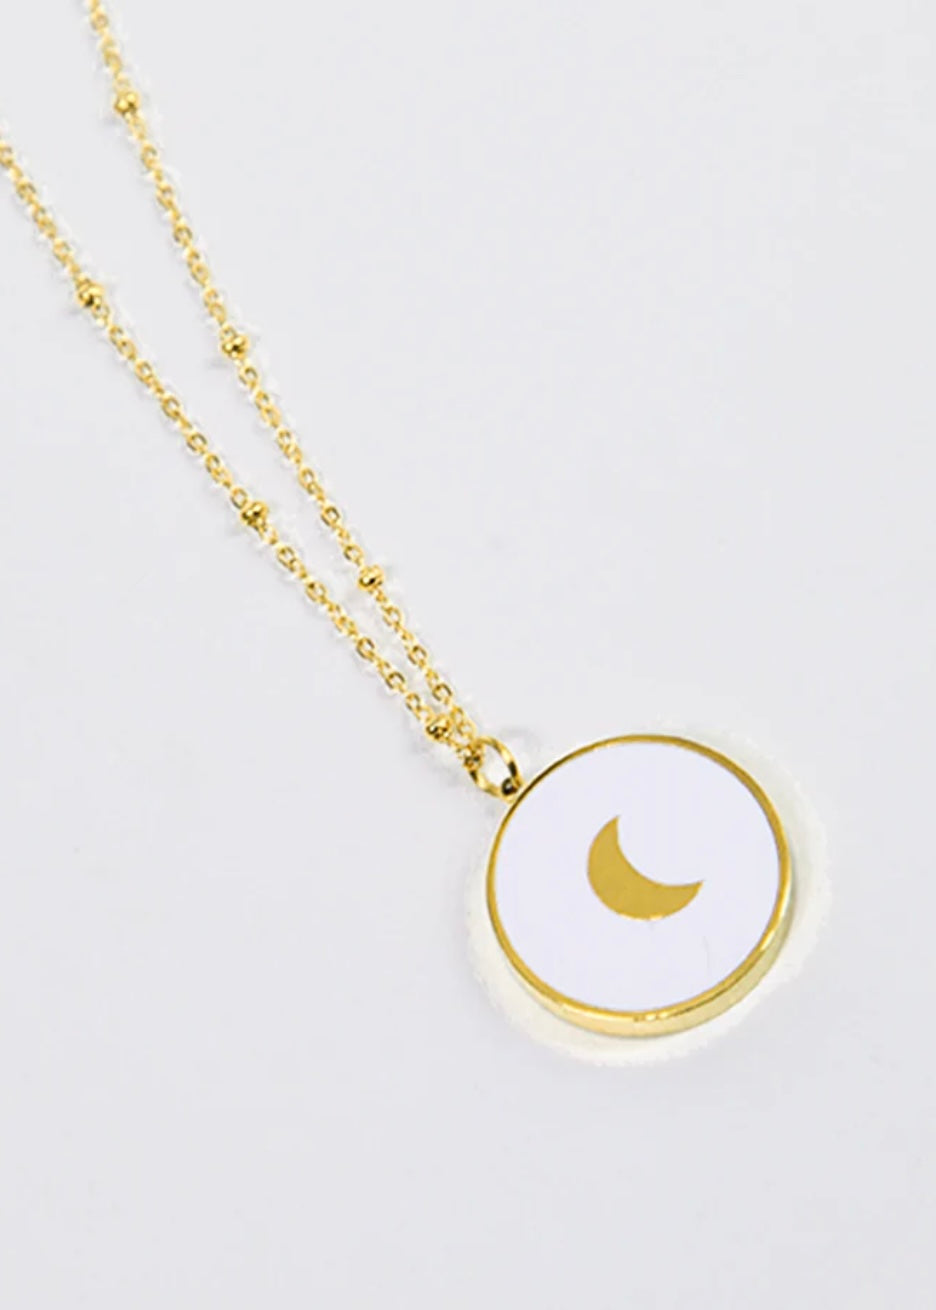 White Gold Circular Crescent Moon Pendant Necklace